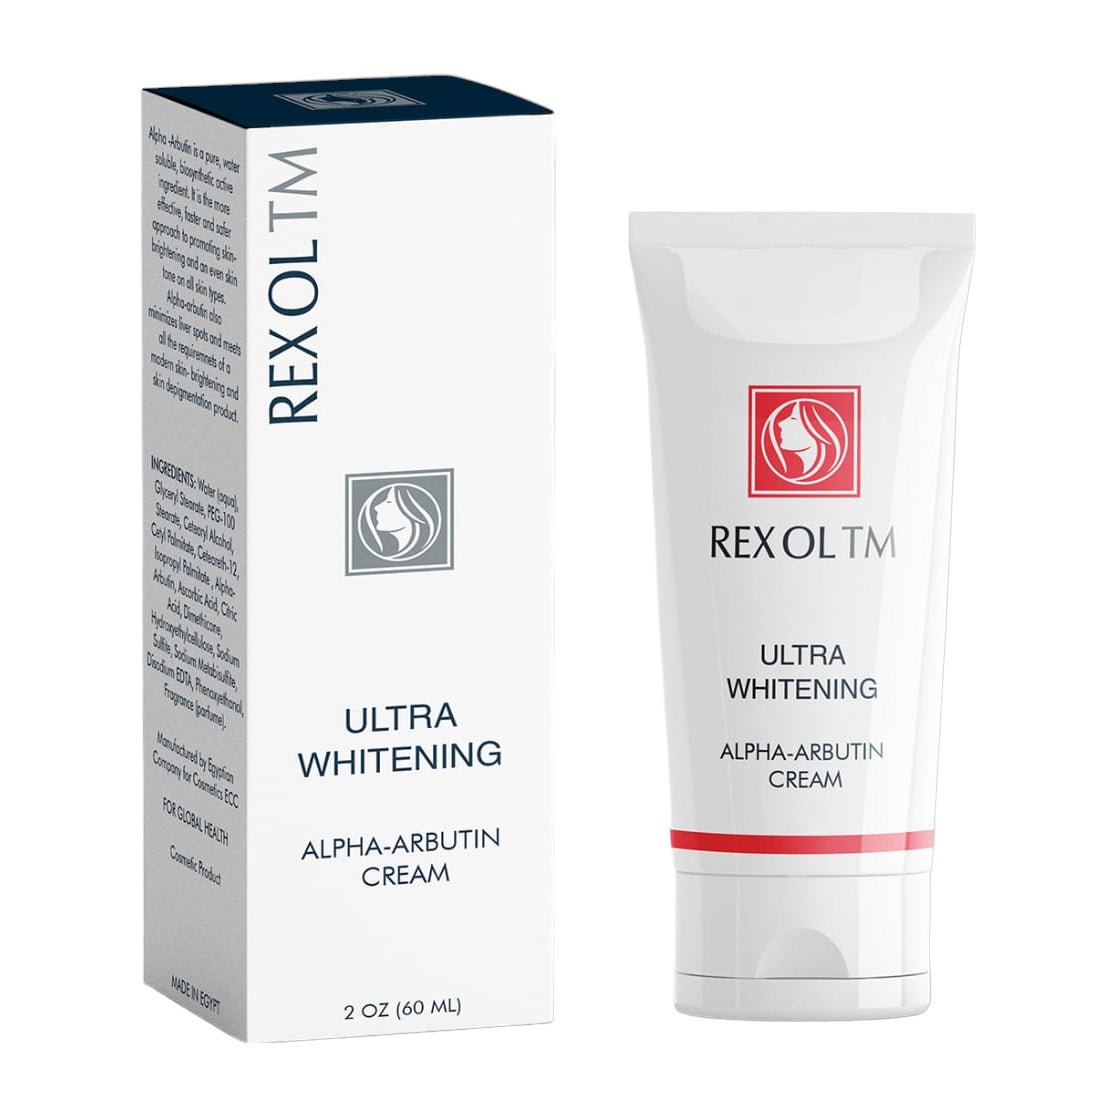 Rexsol TM Ultra Whitening Alpha-Arbutin Cream – 60ml - Bloom Pharmacy